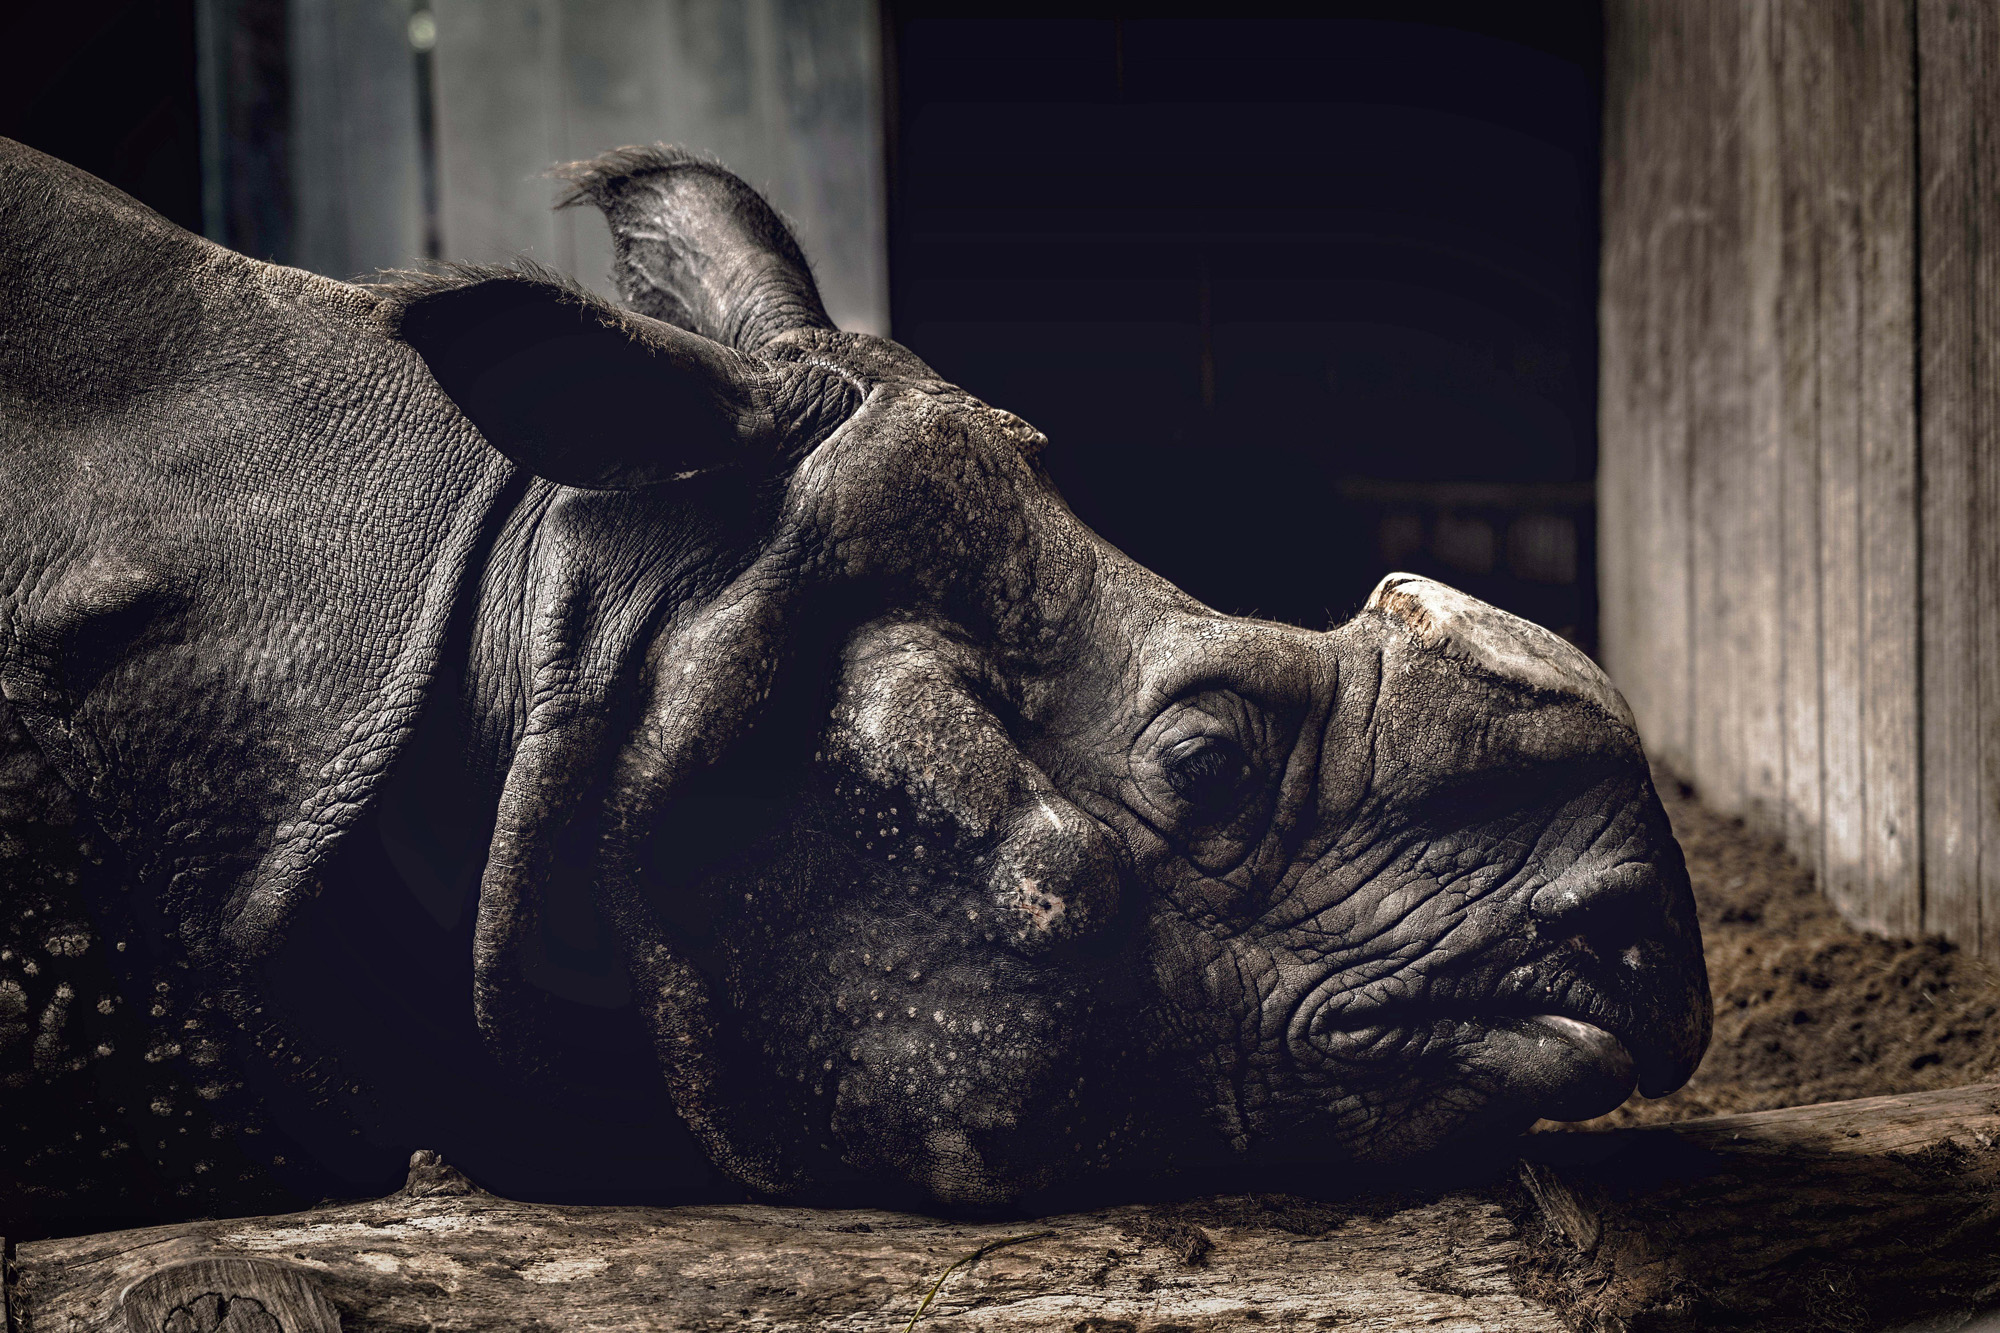 Powerful rhino portrait among Sony World Photography Awards finalists